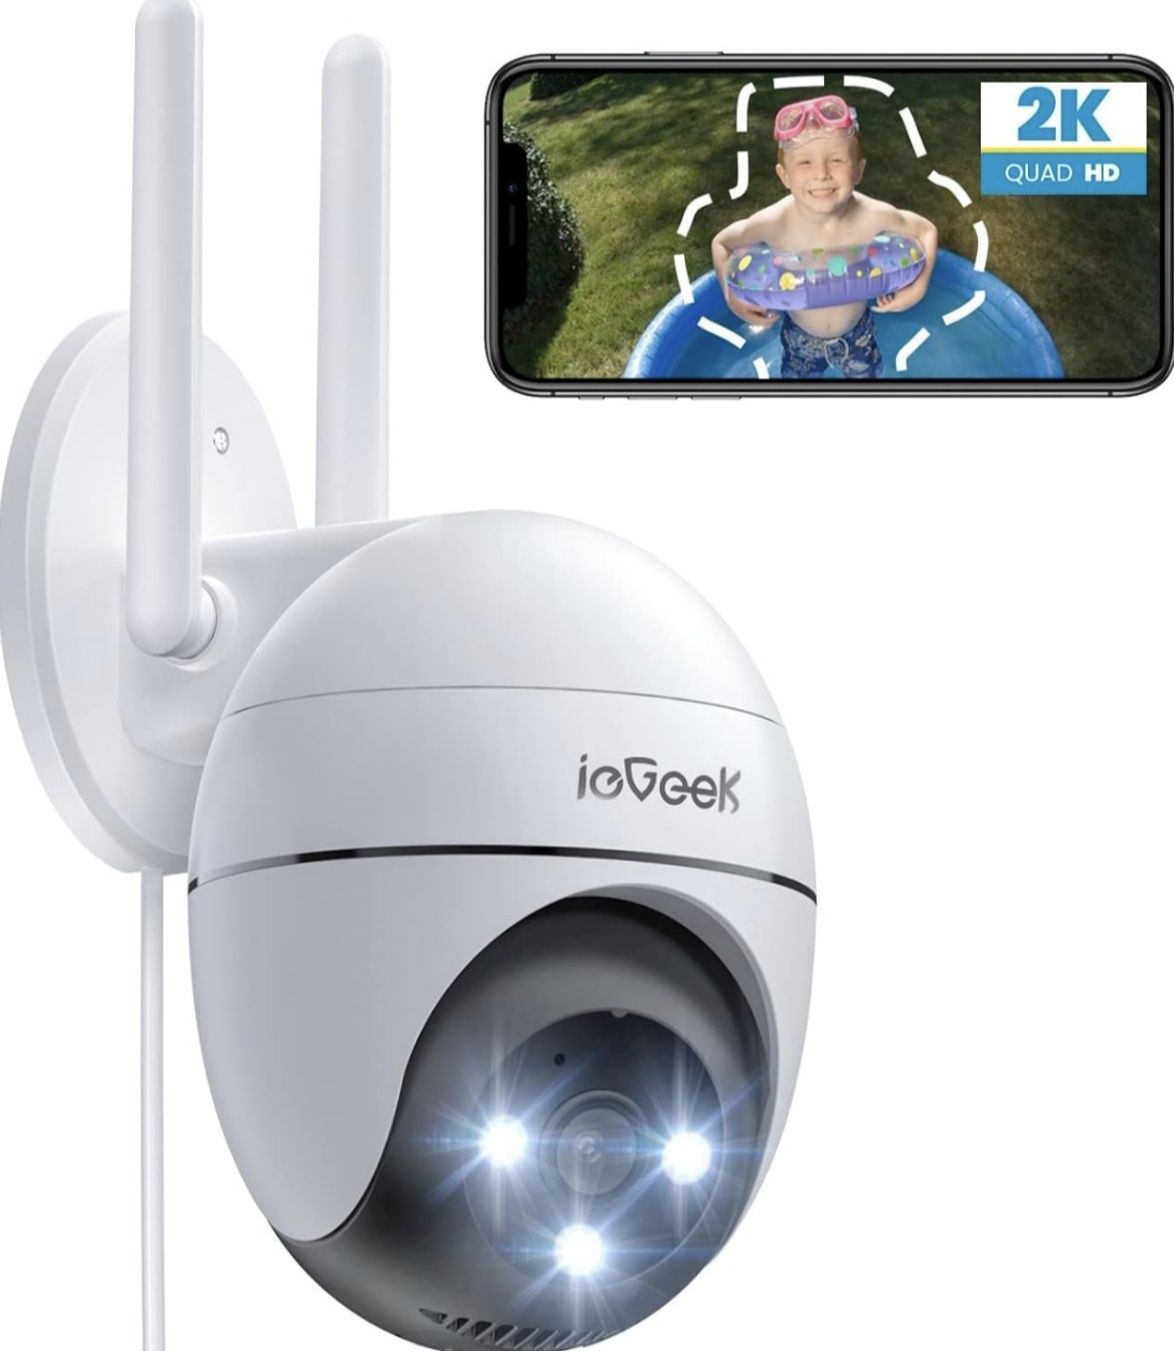 Camera video vigilância WiFi 2k 360